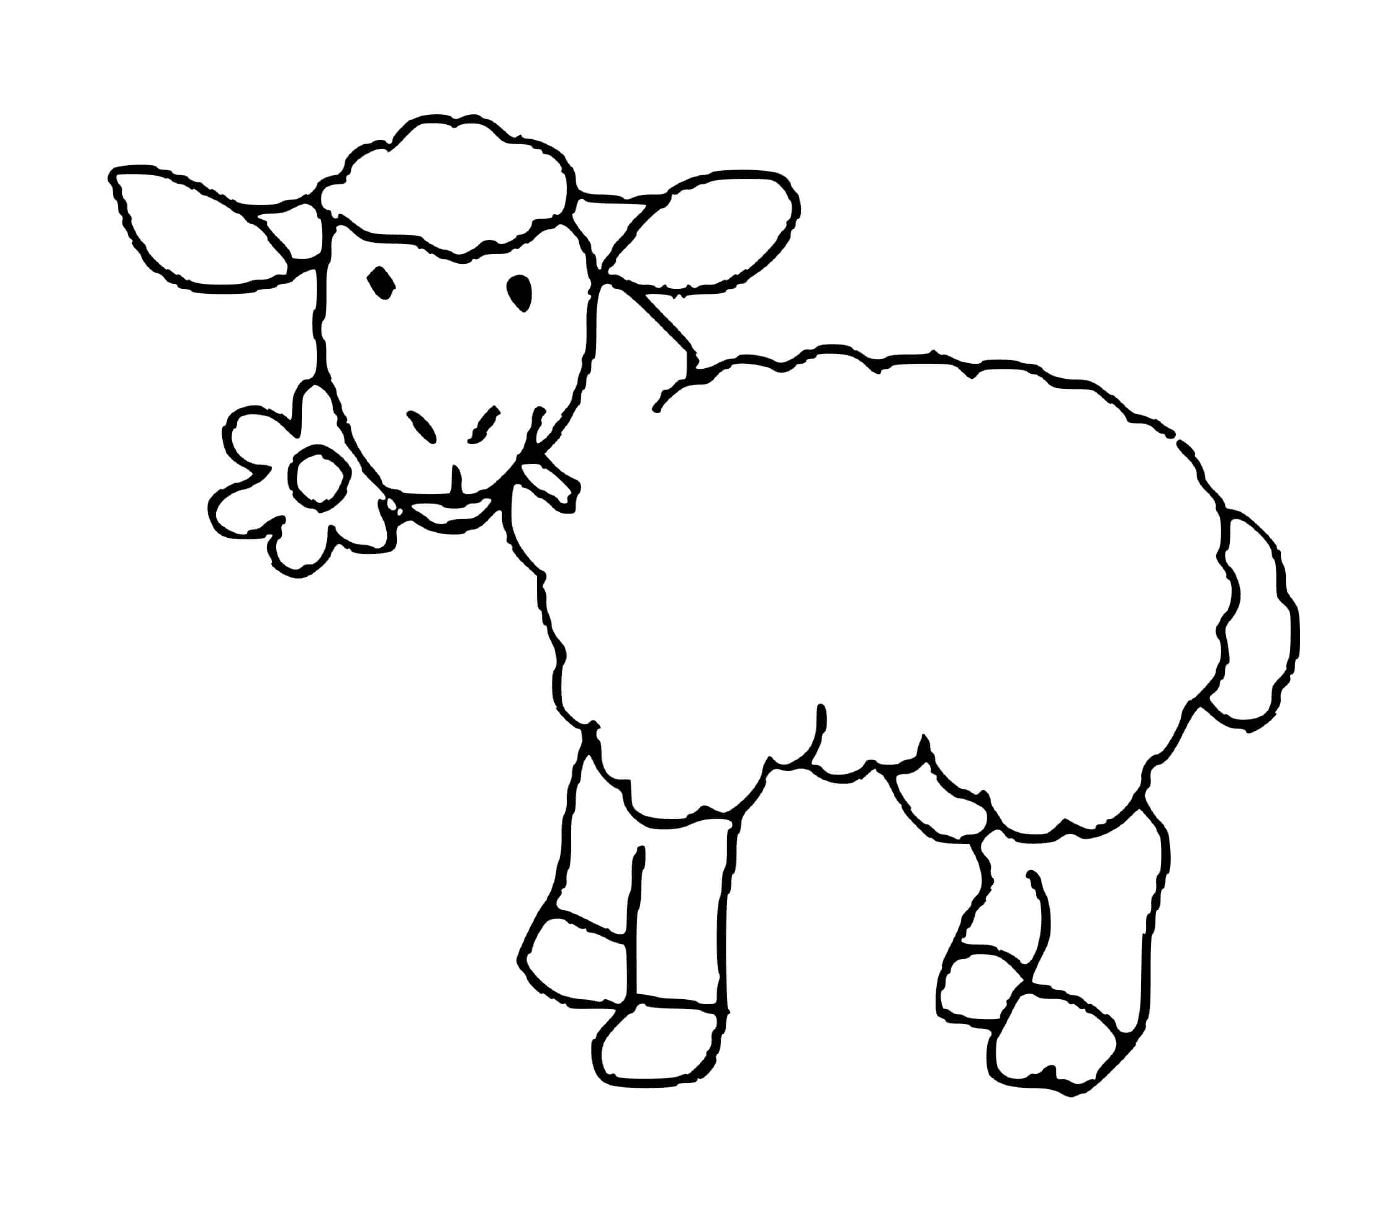  Mouton eats delicately flower 